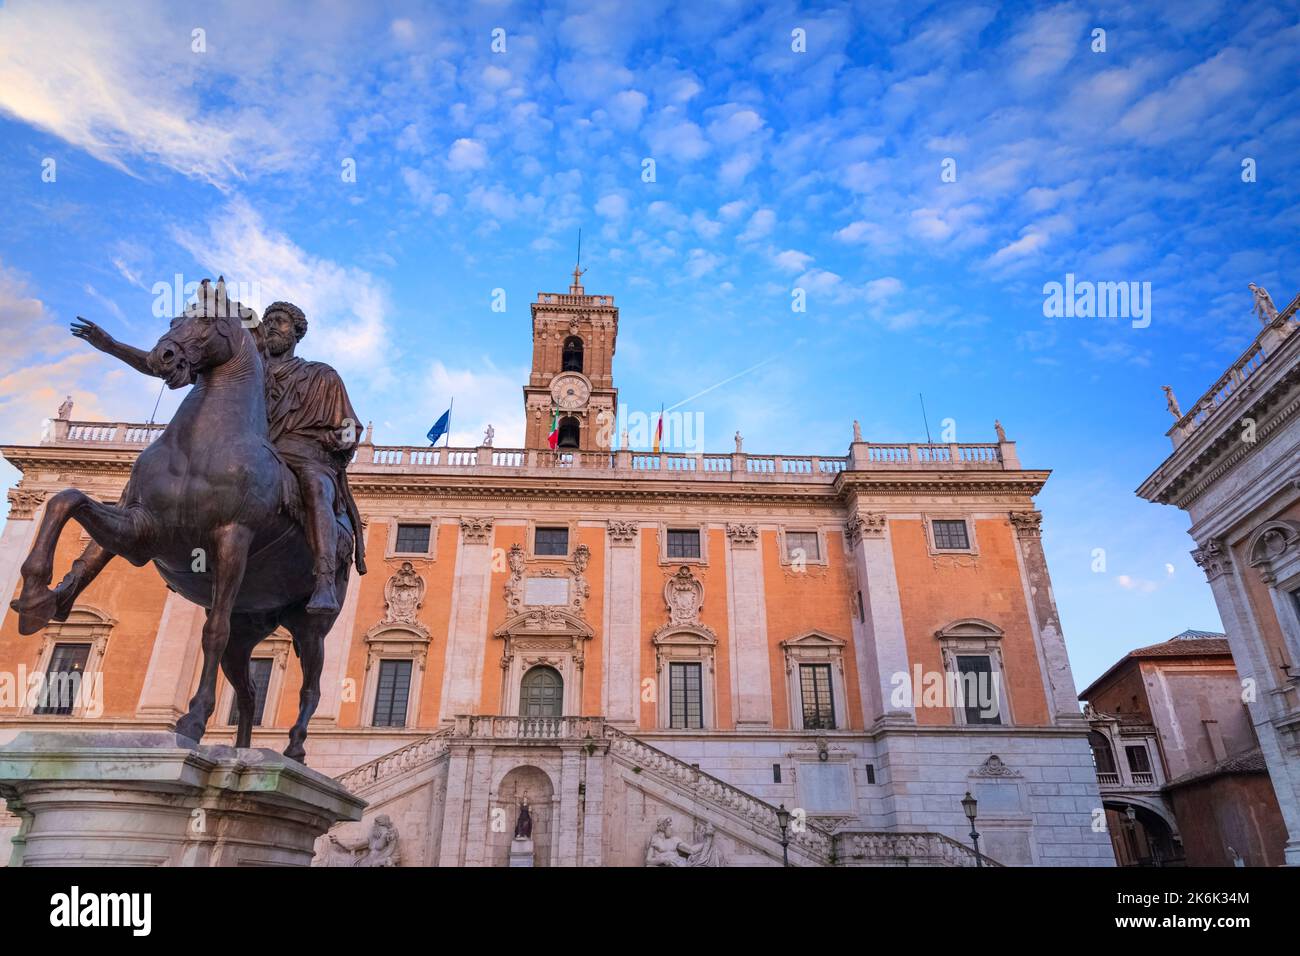 Der Kapitol in Rom, Italien: Statue des römischen Imperators Marcus Aurelius zu Pferd vor dem Palazzo Senatorio. Stockfoto